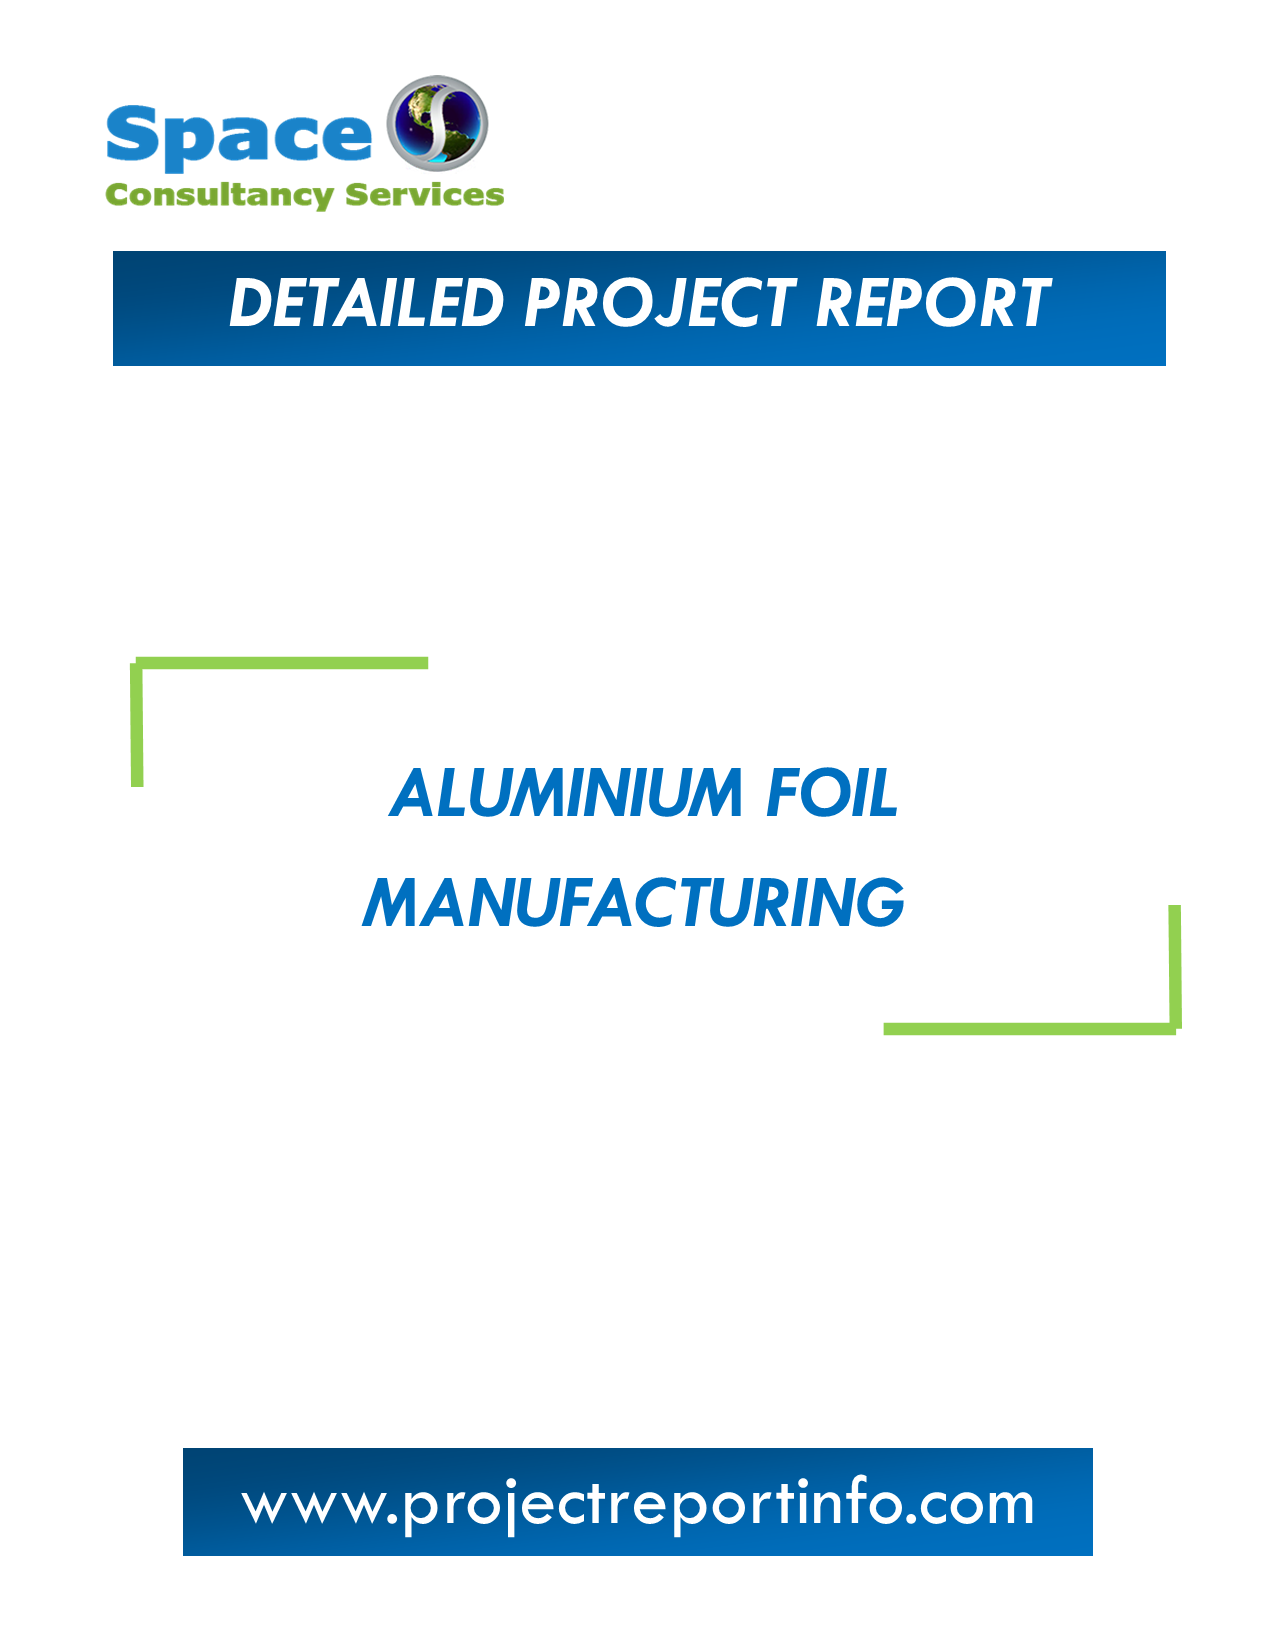 Project Report on Aluminium Foil Manufacturing